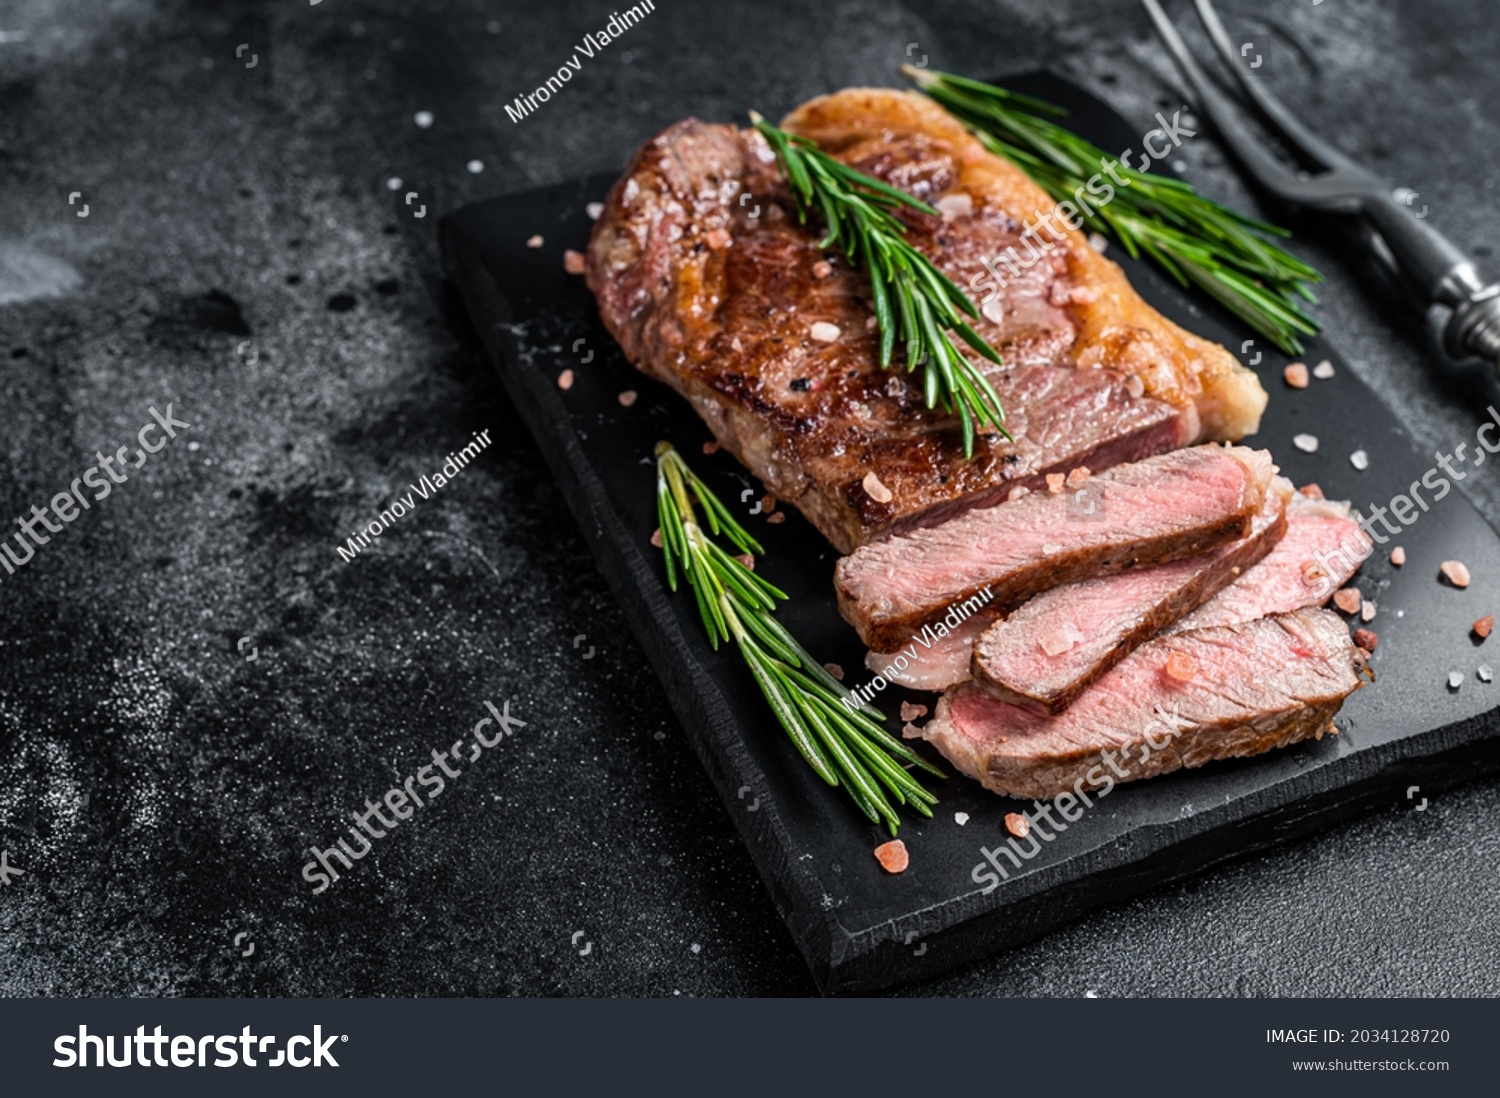 Cut Roasted New York Strip Beef Stock Photo 2034128720 | Shutterstock